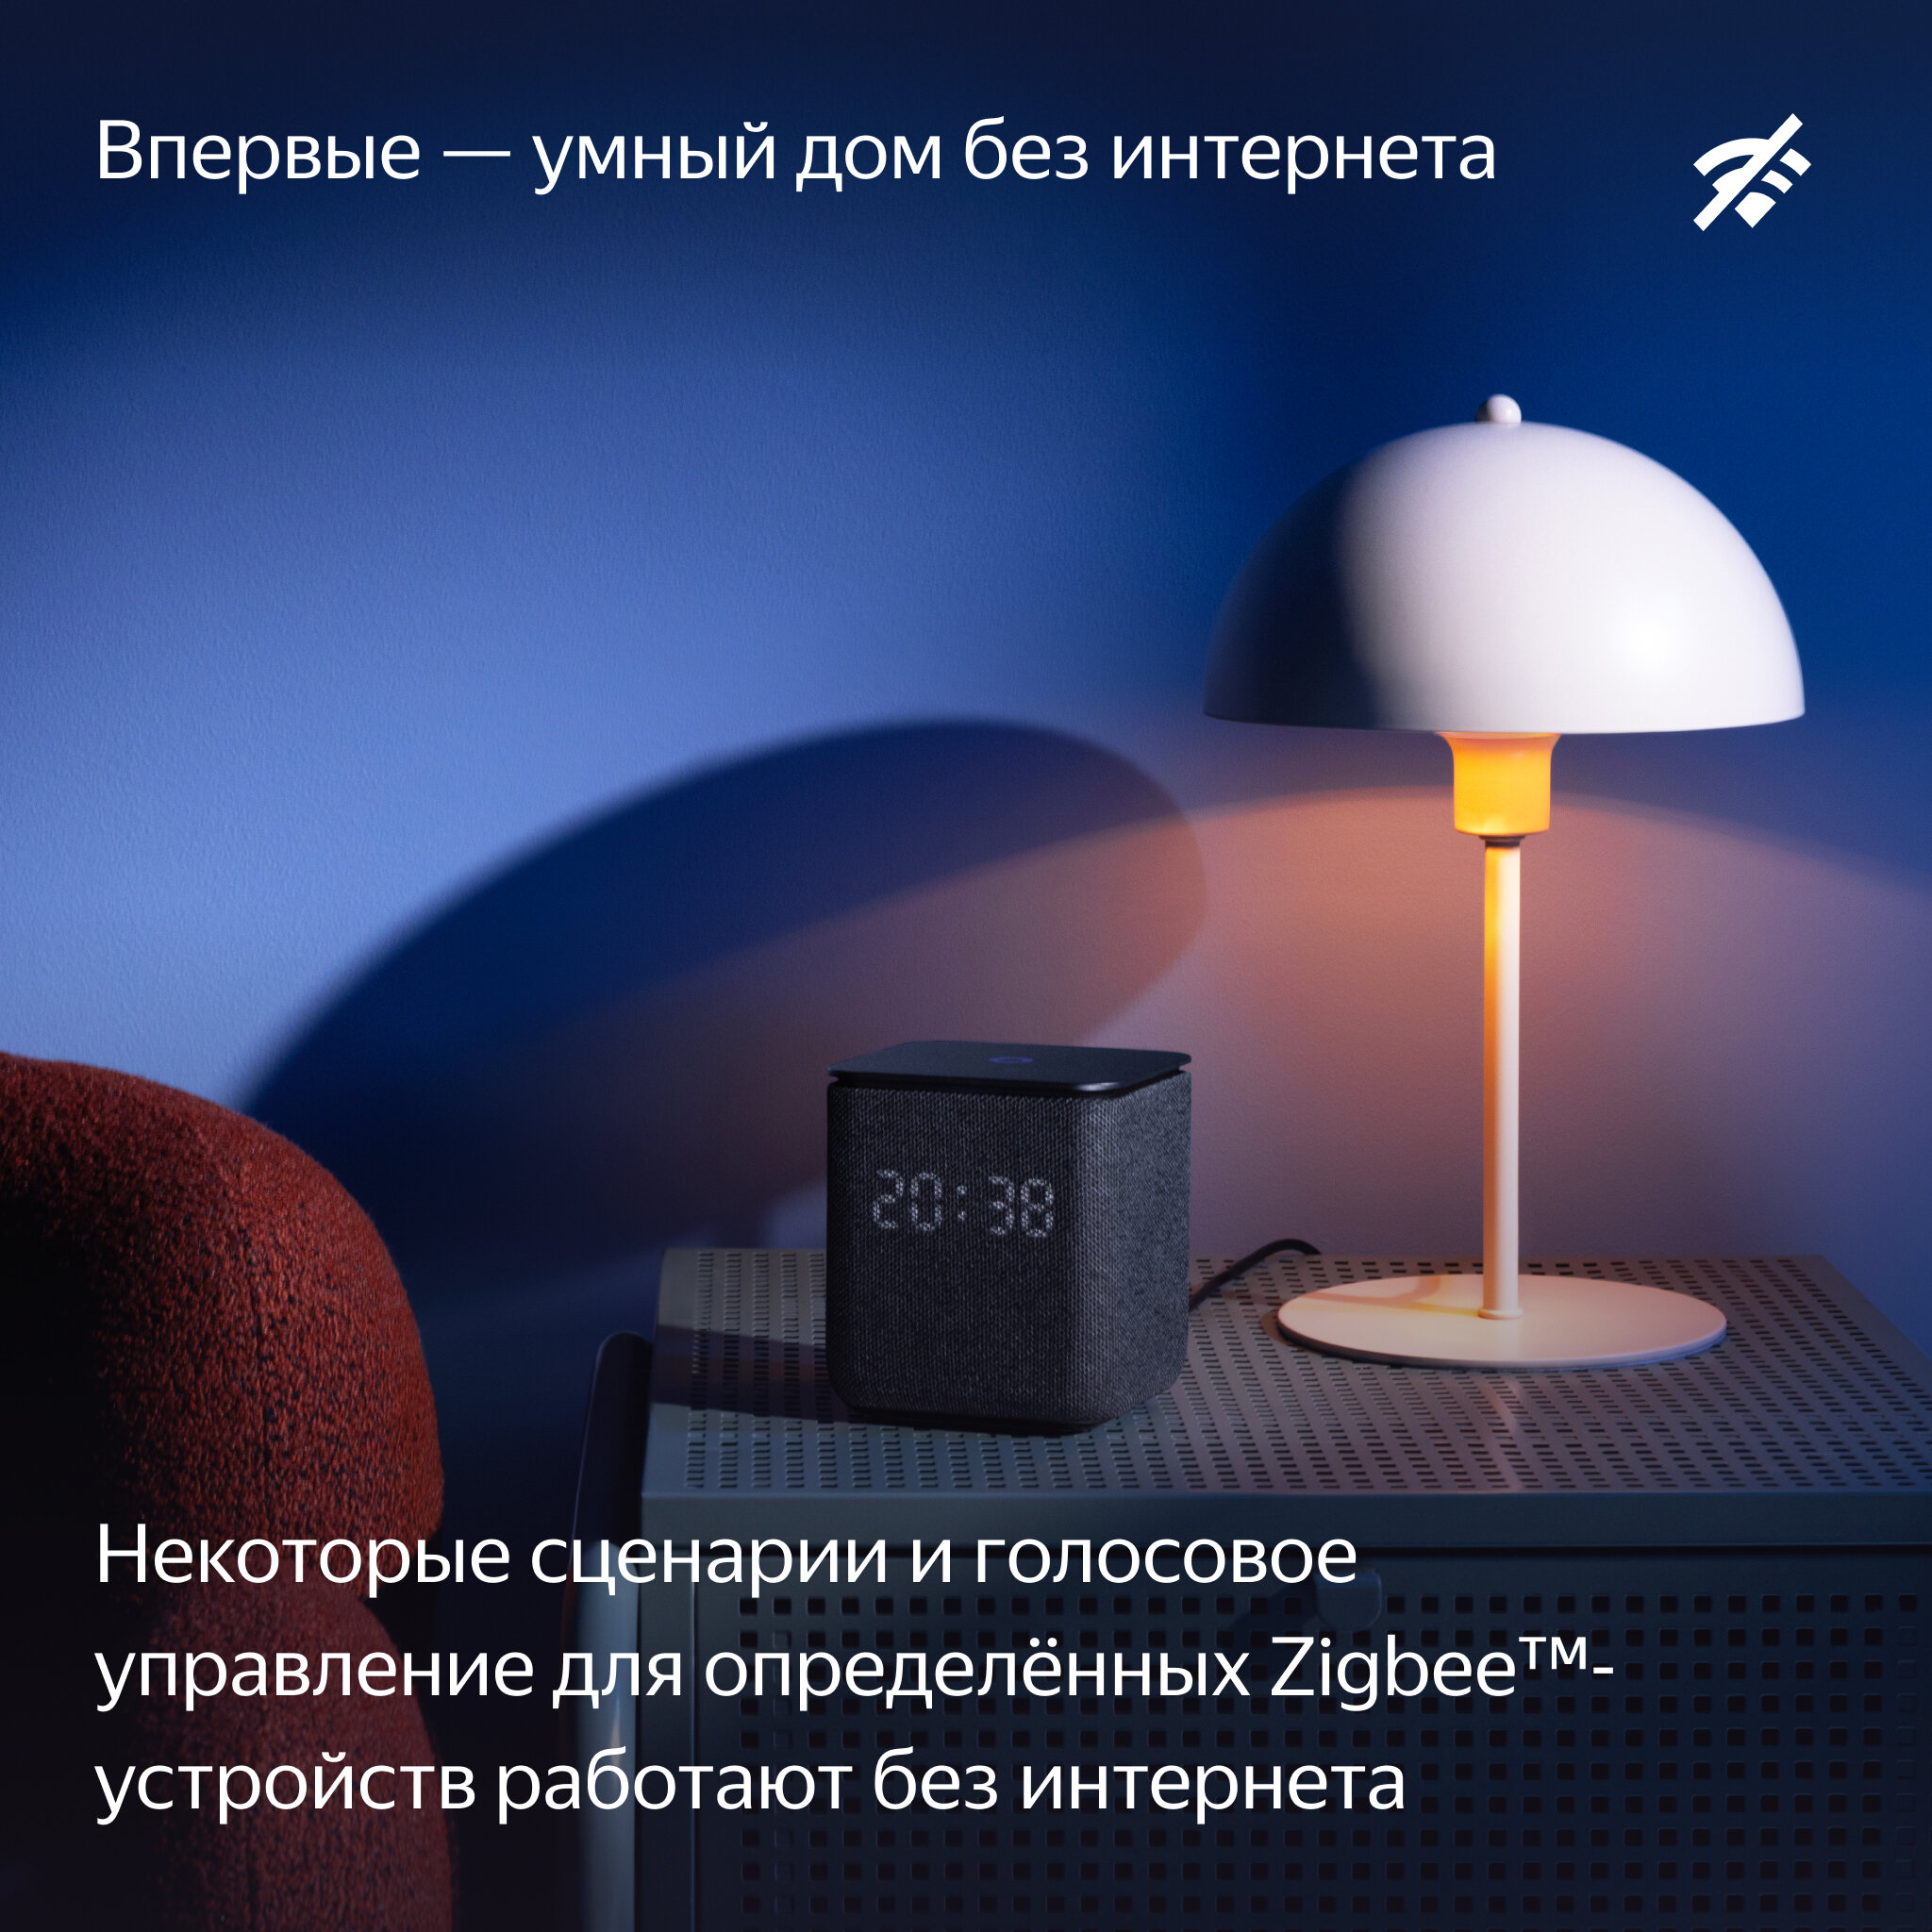 Яндекс Станция Миди с Zigbee YNDX-00054 Orange купить